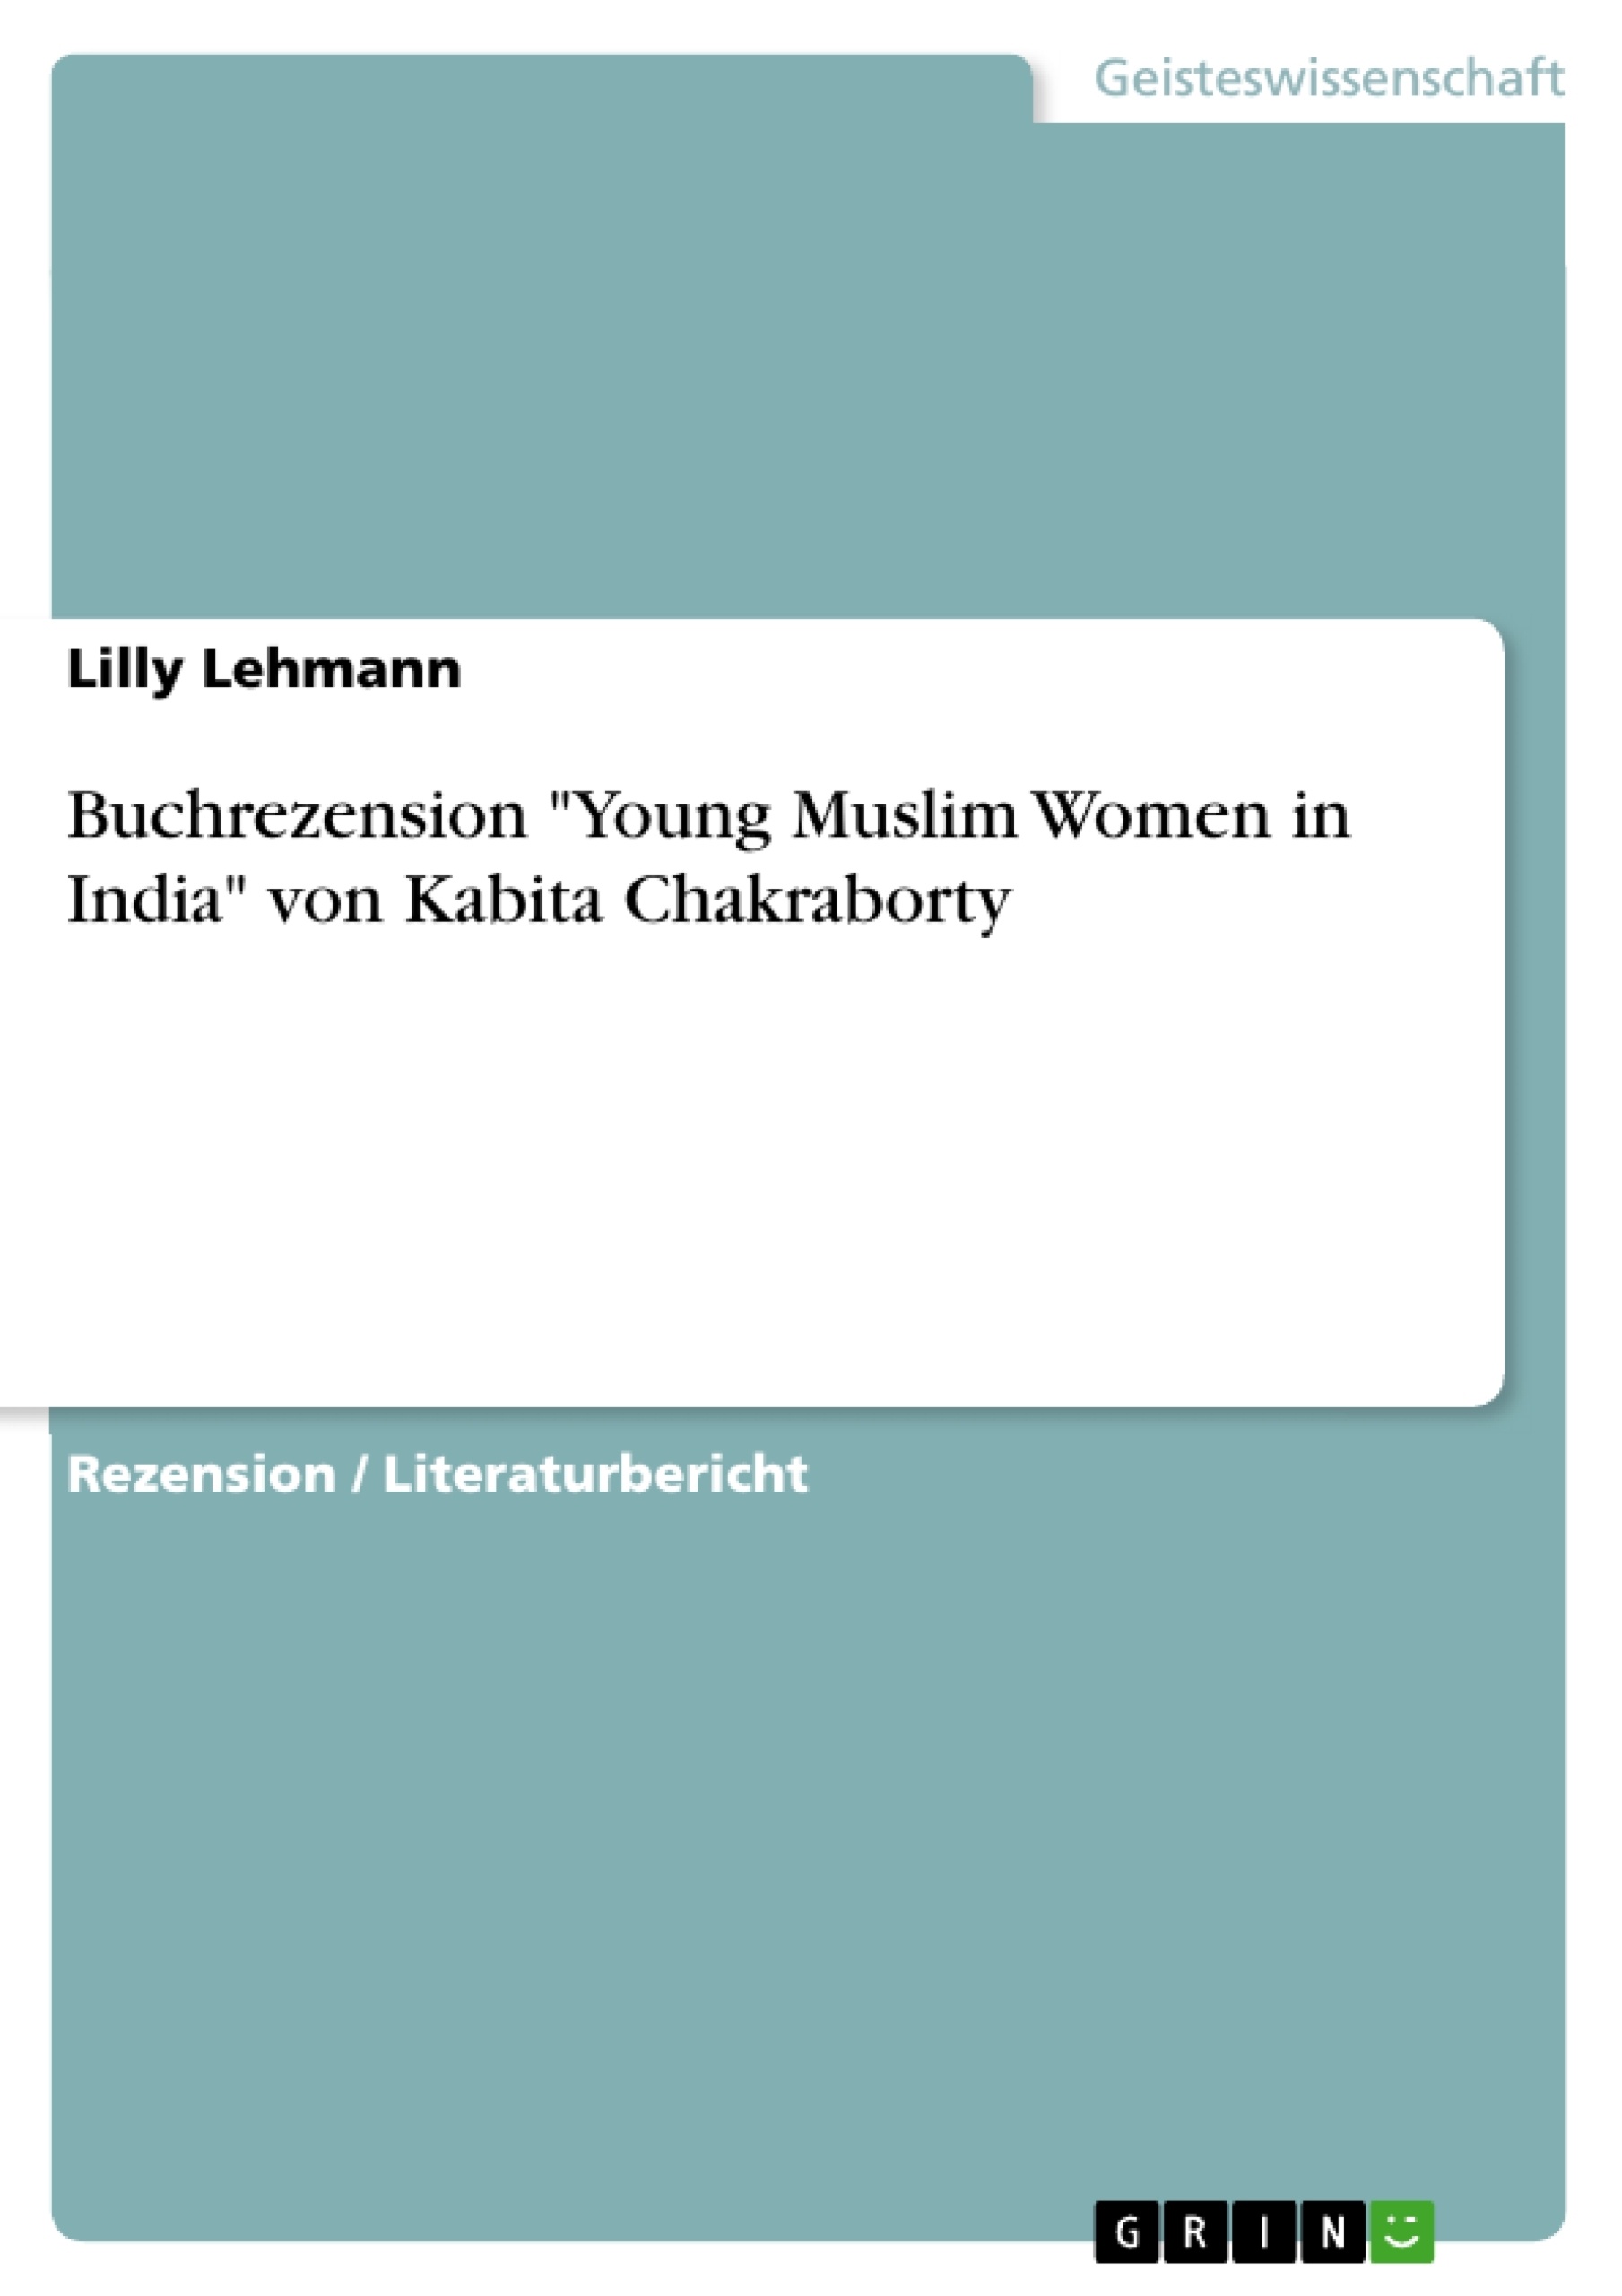 Titre: Buchrezension "Young Muslim Women in India" von Kabita Chakraborty